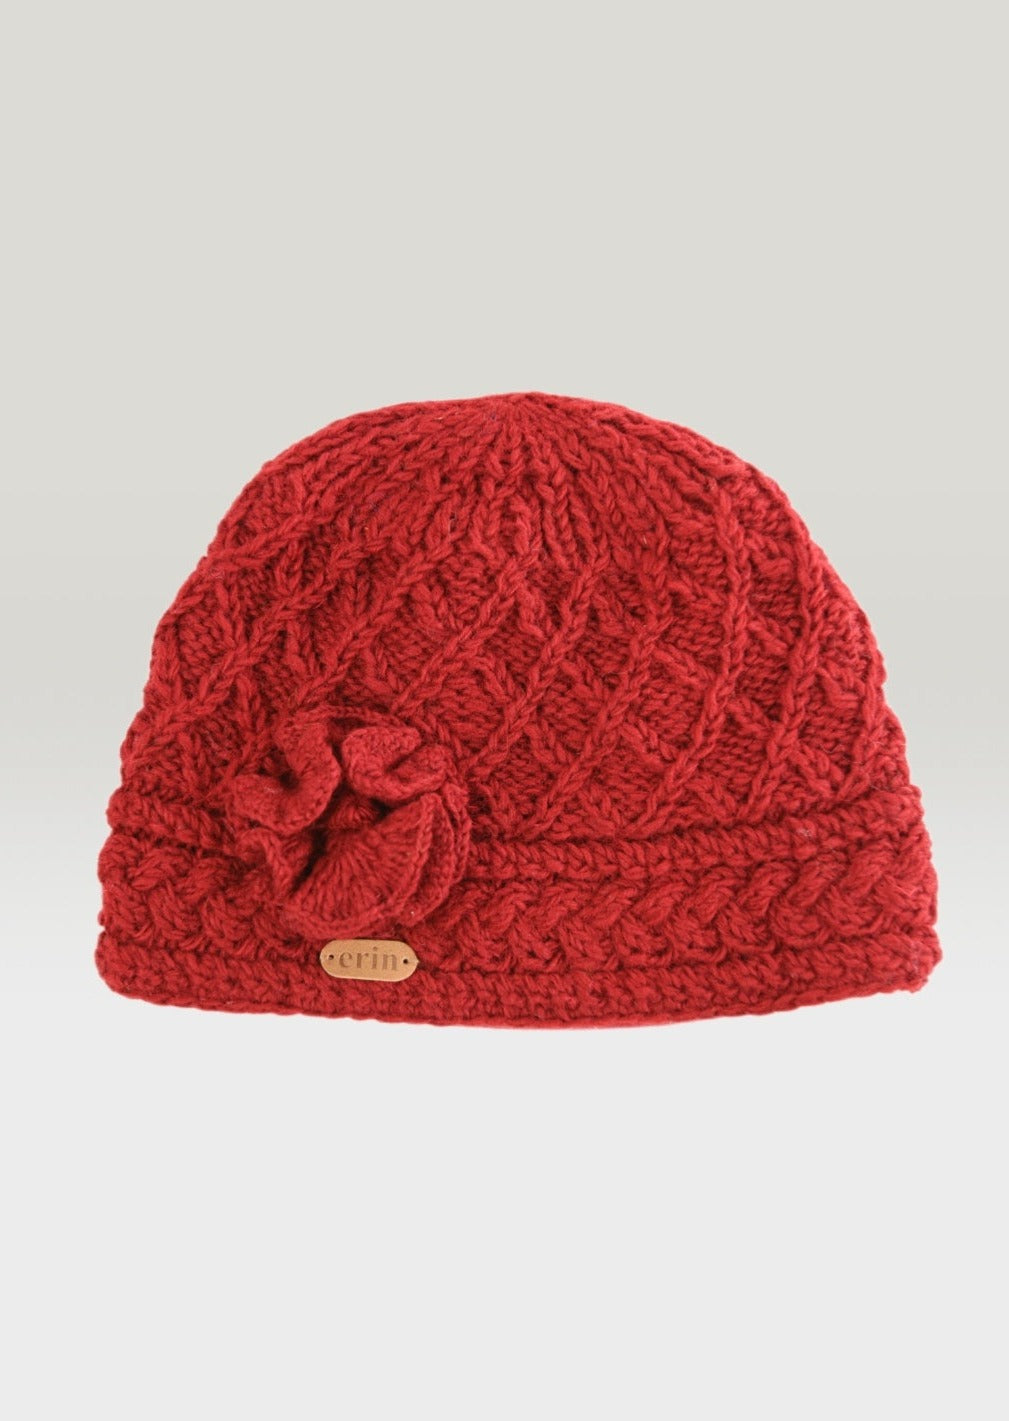 Aran Trellis Red Flower Hat